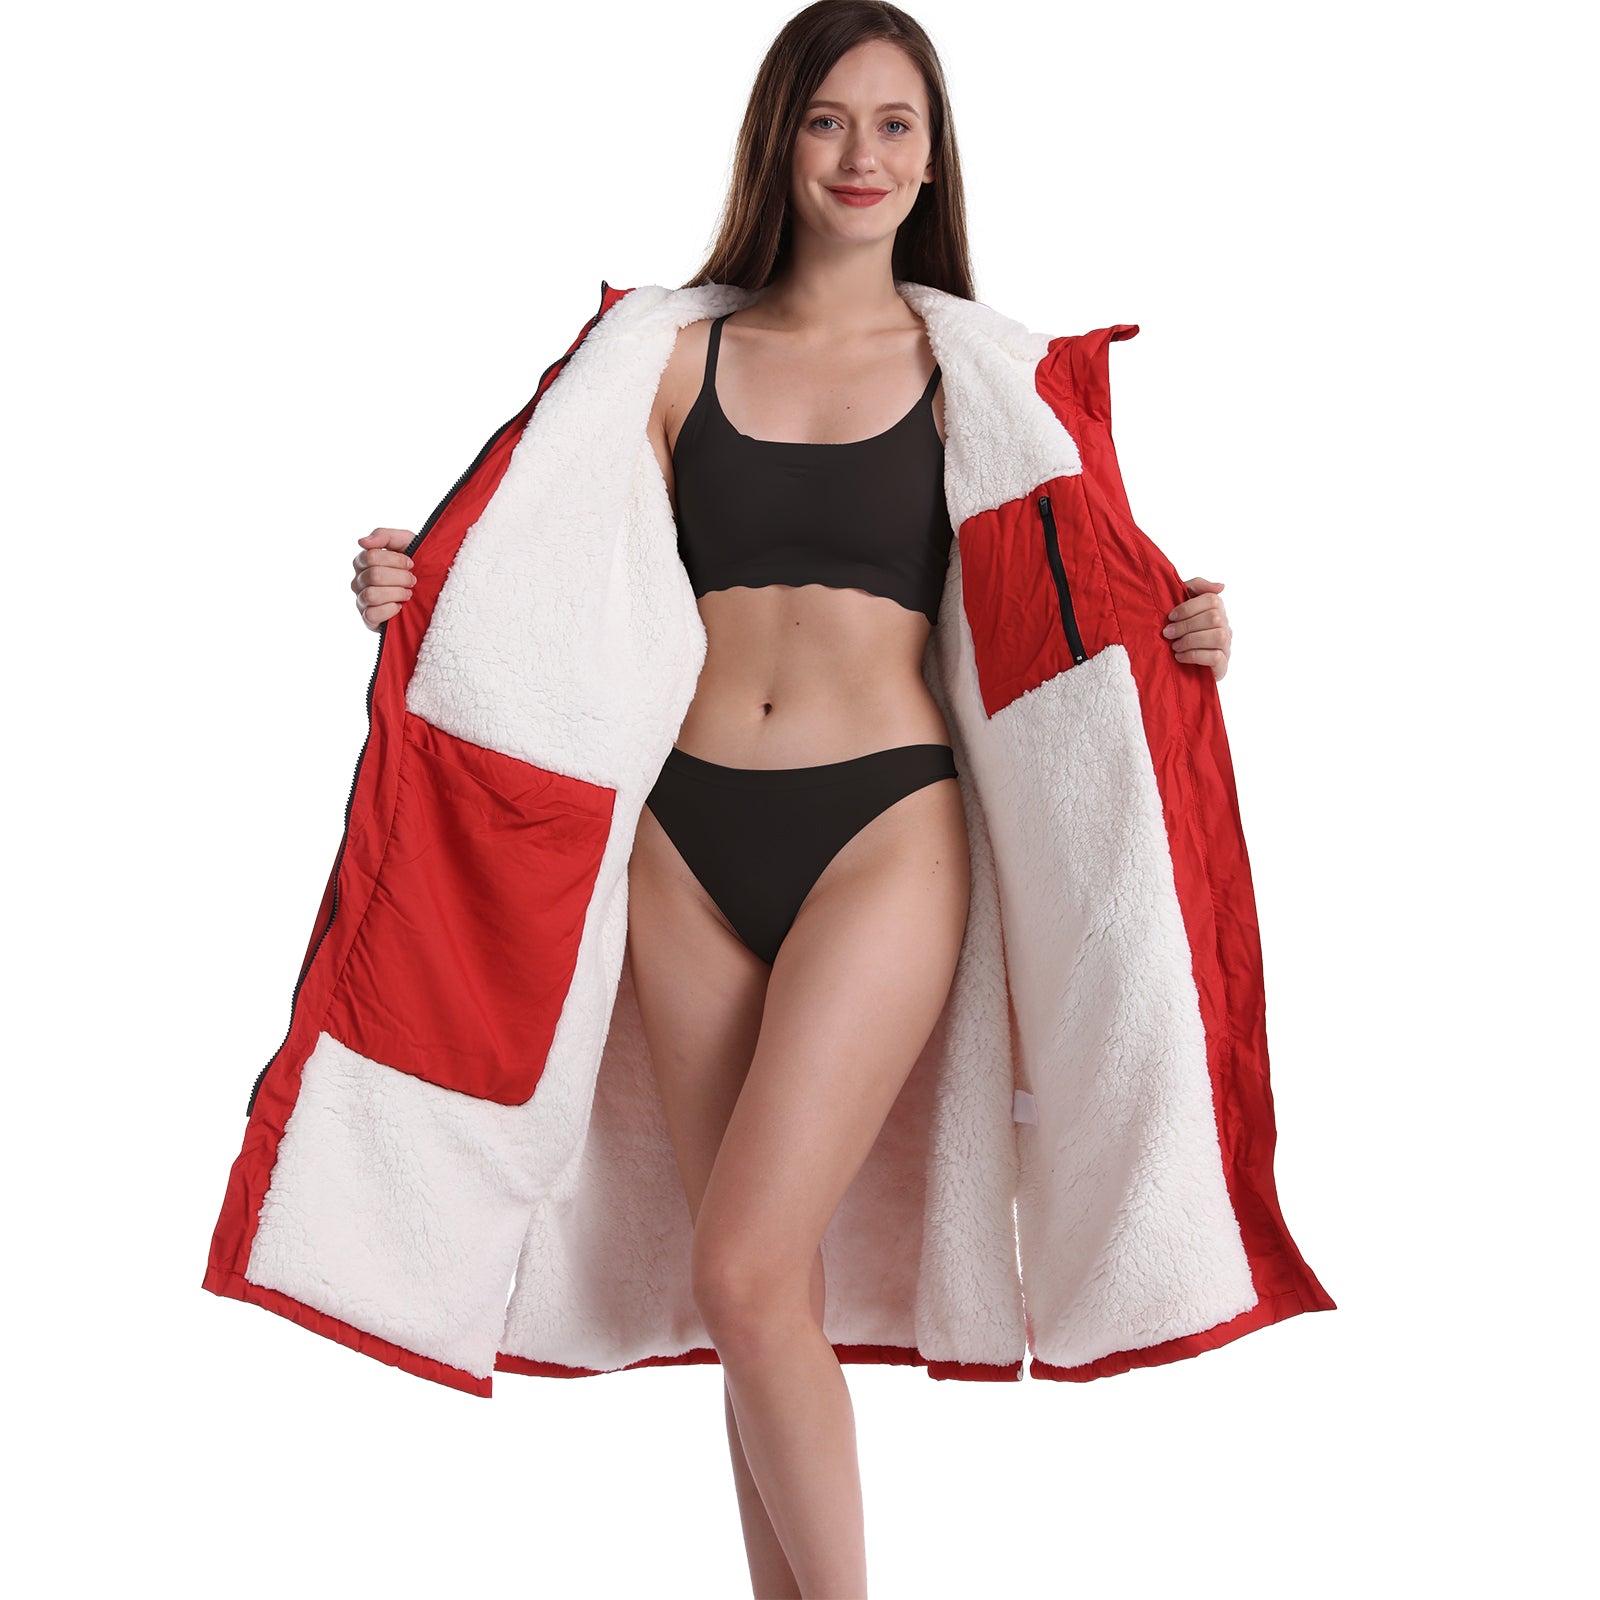 Adult Waterproof Bathrobe，Windproof Swim Parka Oversized Surf Poncho Hooded Warm Coat Fleece Lining